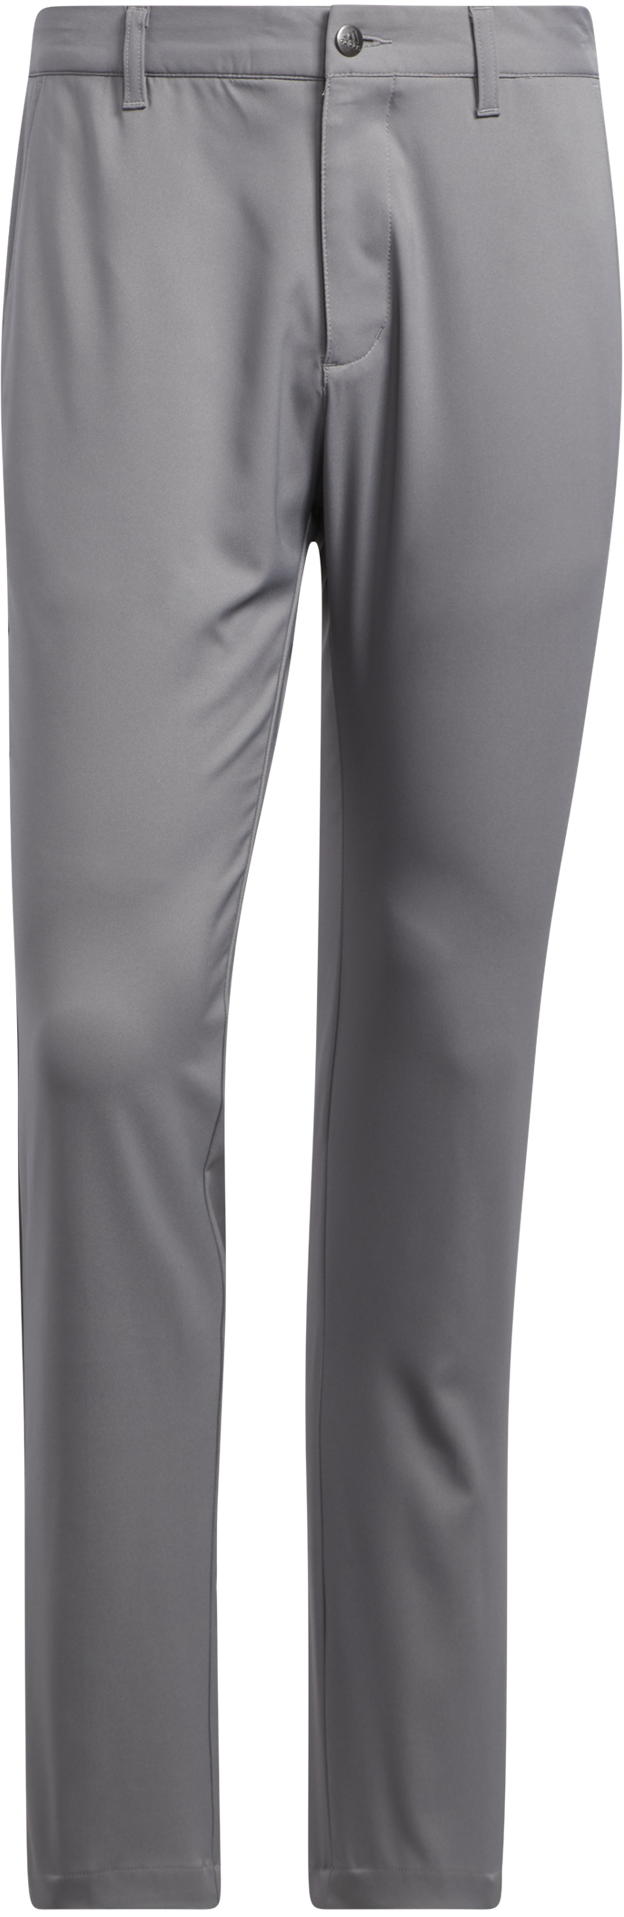 adidas Ultimate365 Primegreen Tapered Pant, grey three